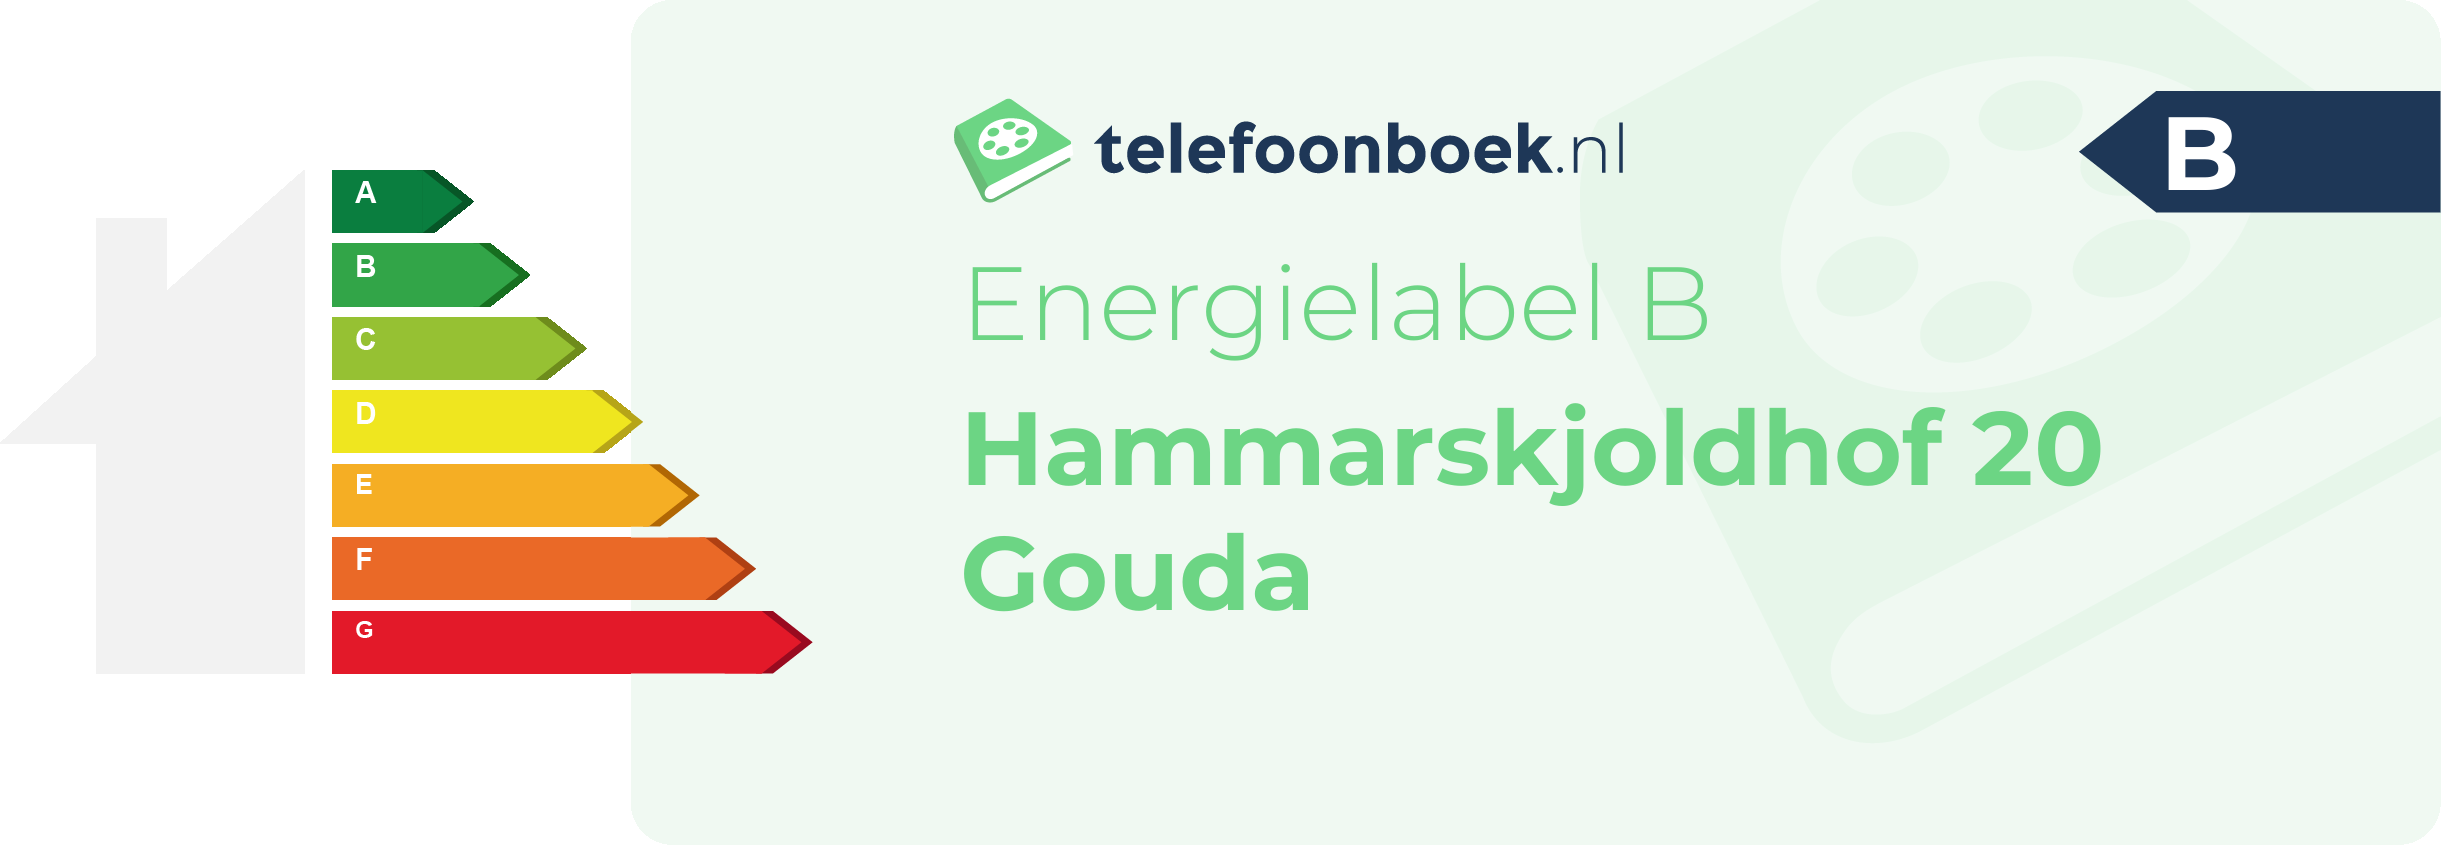 Energielabel Hammarskjoldhof 20 Gouda